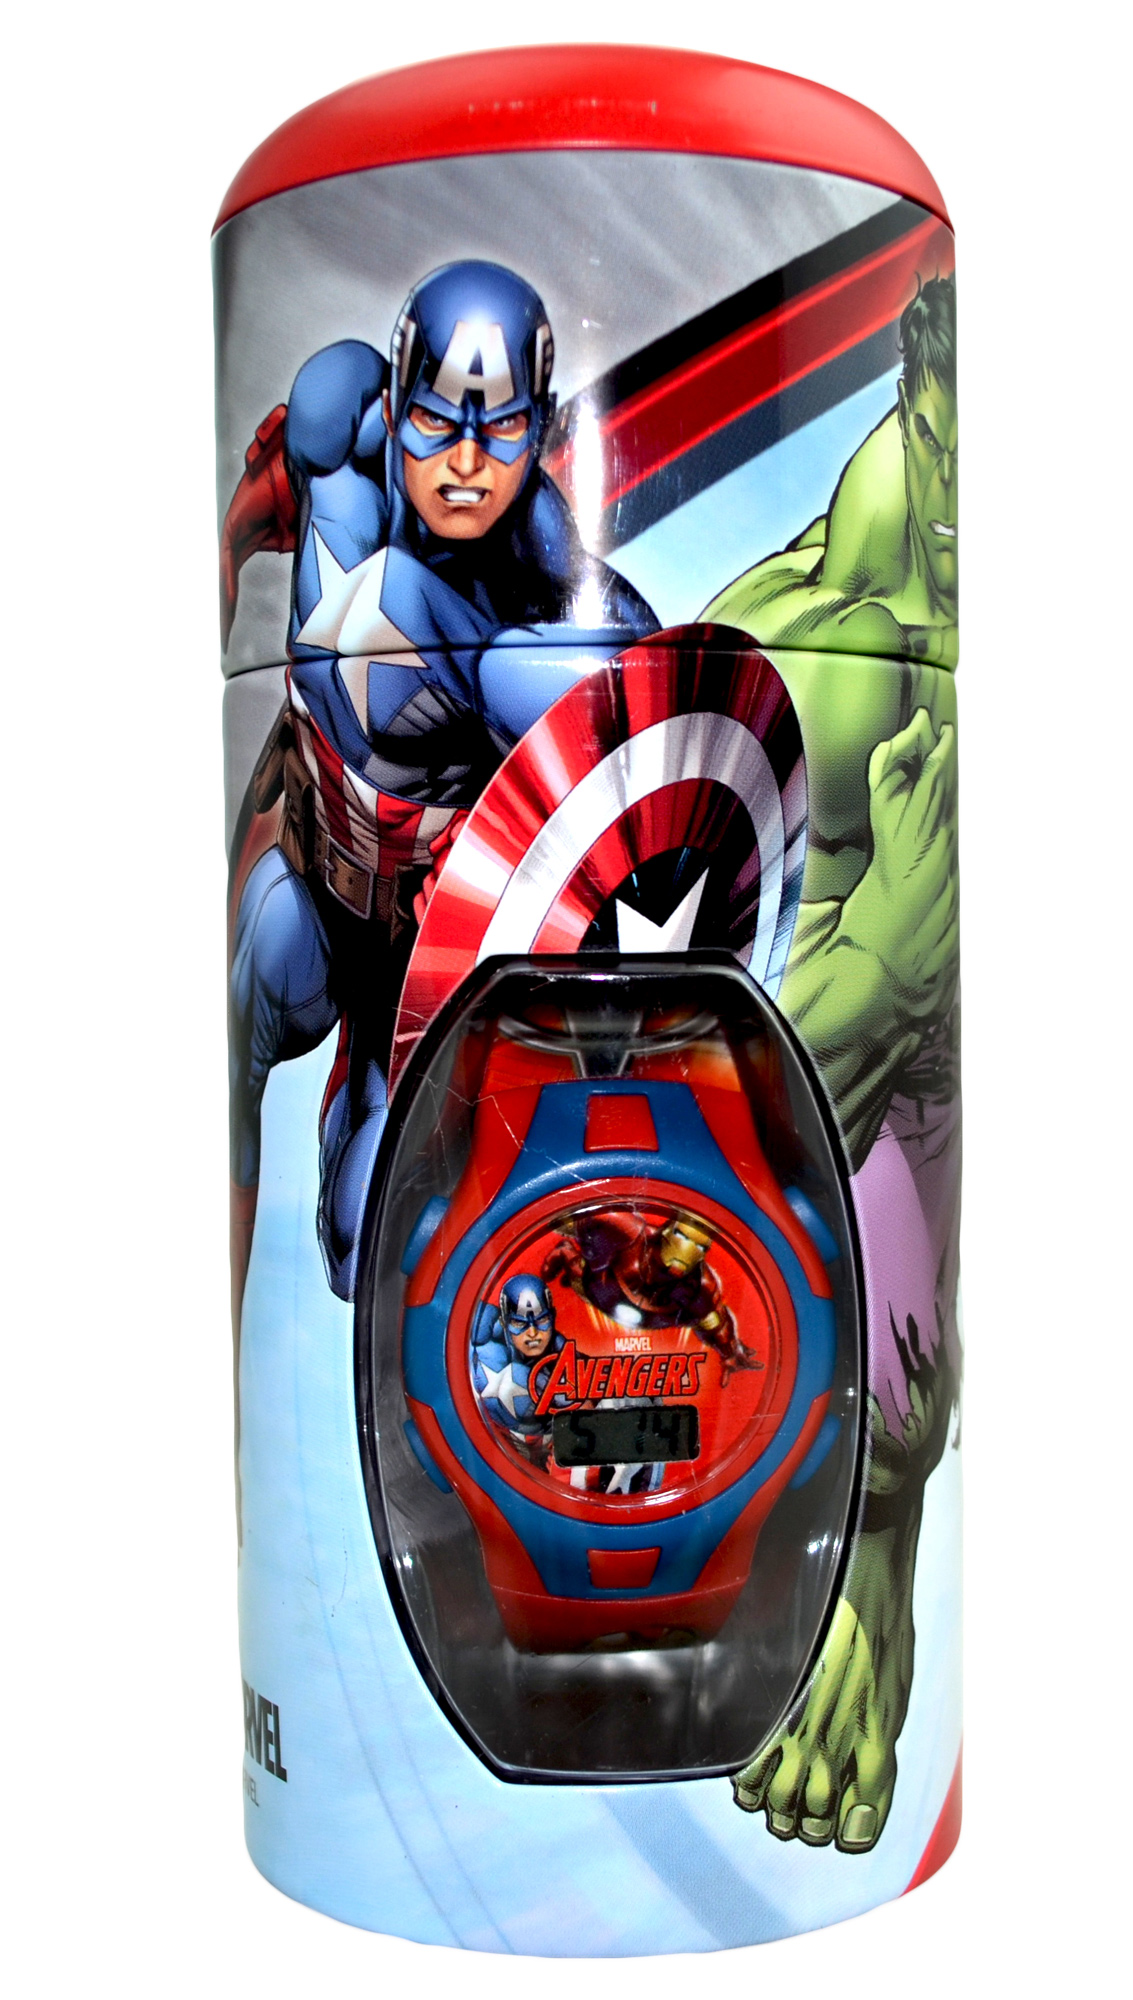 Avengers 'Force' Boys Digital Metal Tin Gift Wrist Watch